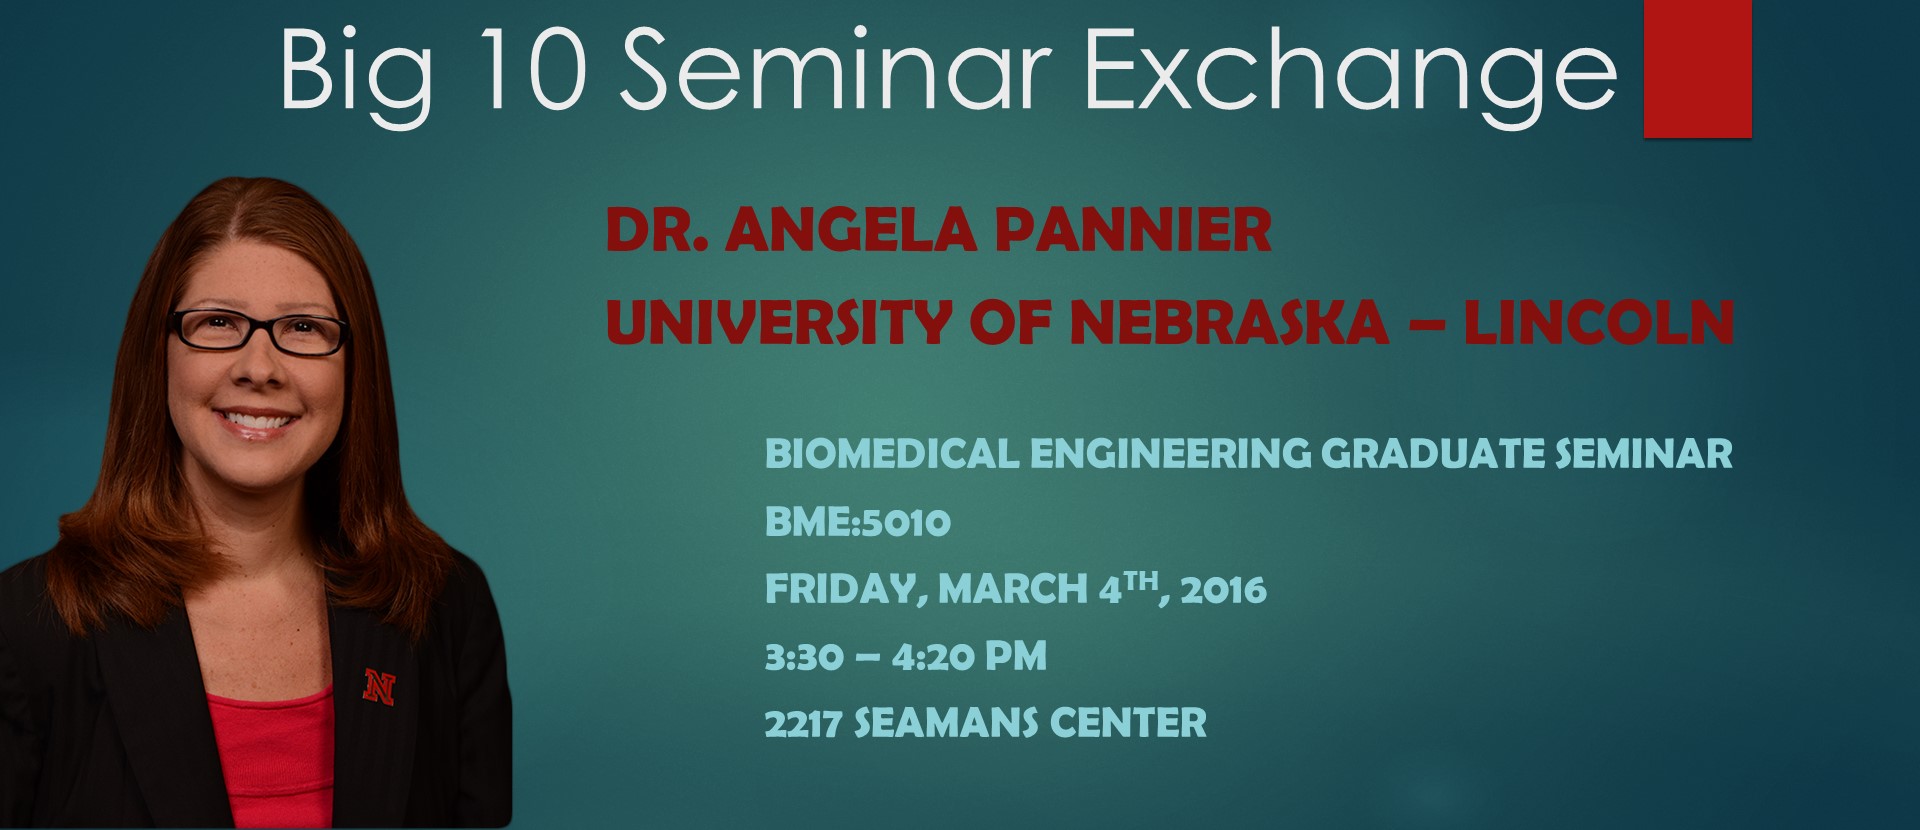 Pannier Big 10 exchange seminar 3/4/16 3:30 pm, 2217 SC